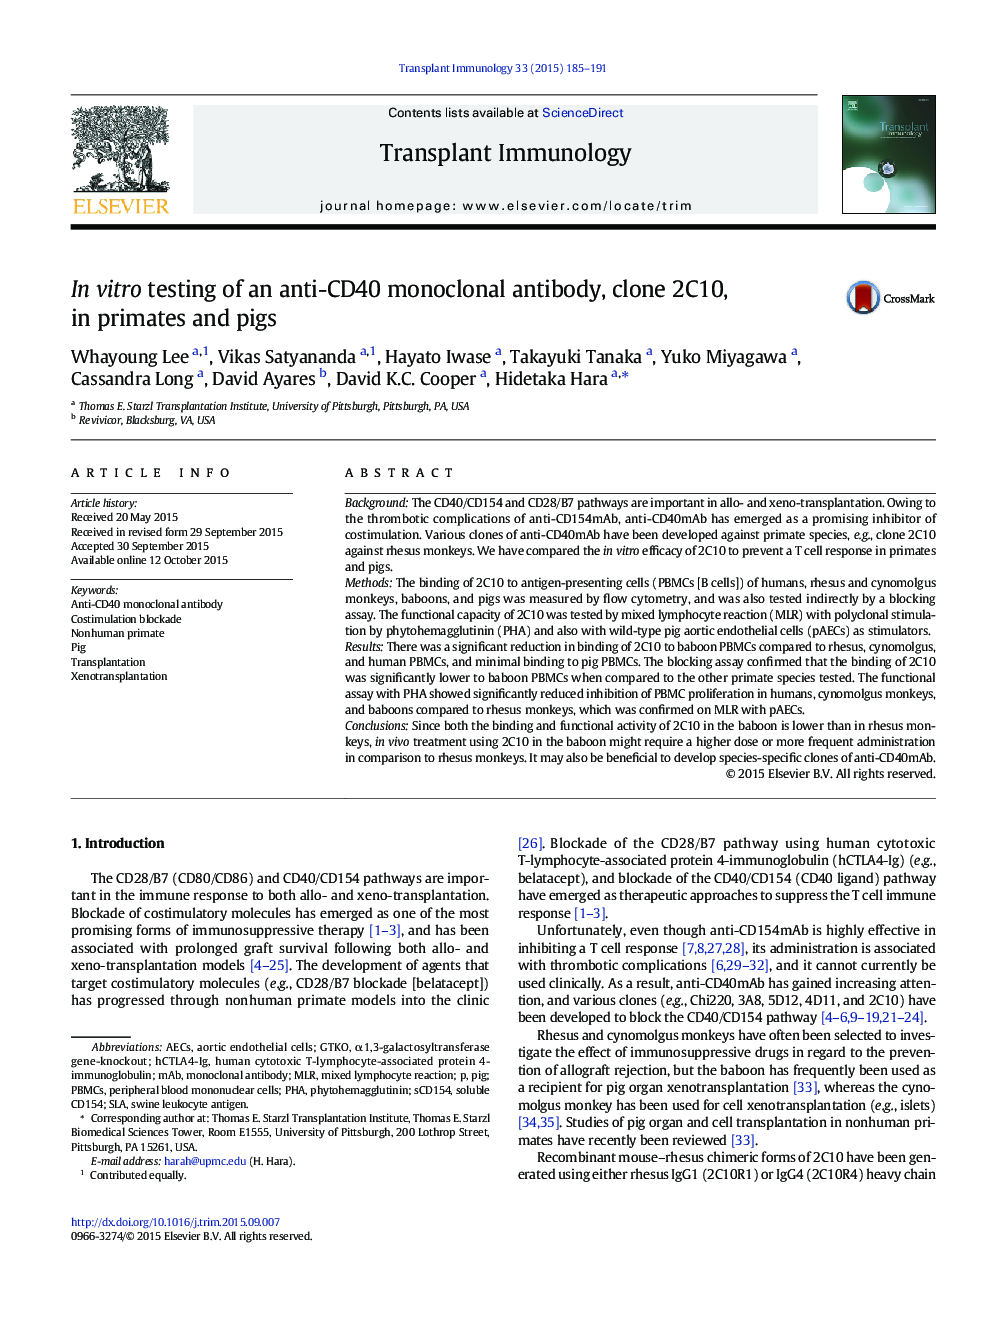 In vitro testing of an anti-CD40 monoclonal antibody, clone 2C10, in primates and pigs